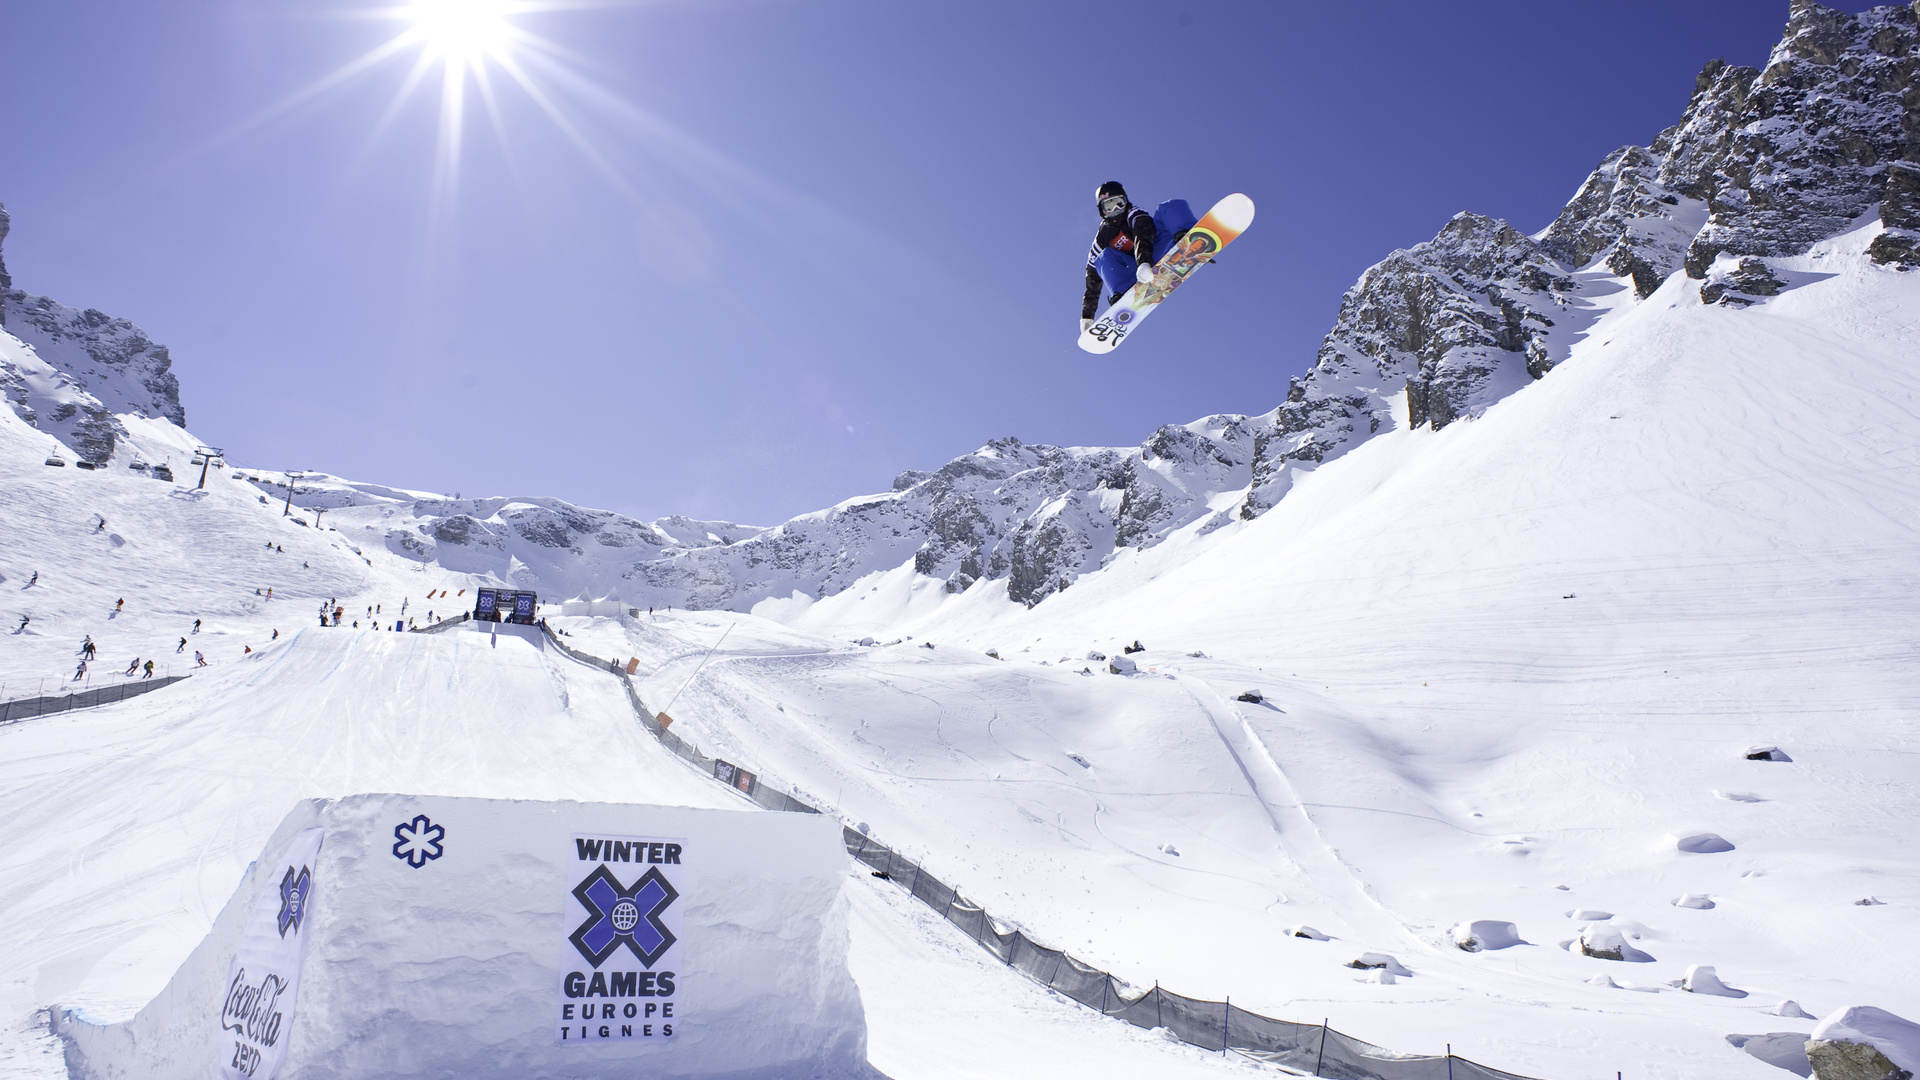 grab, Snowboarding, x-games, travis rice